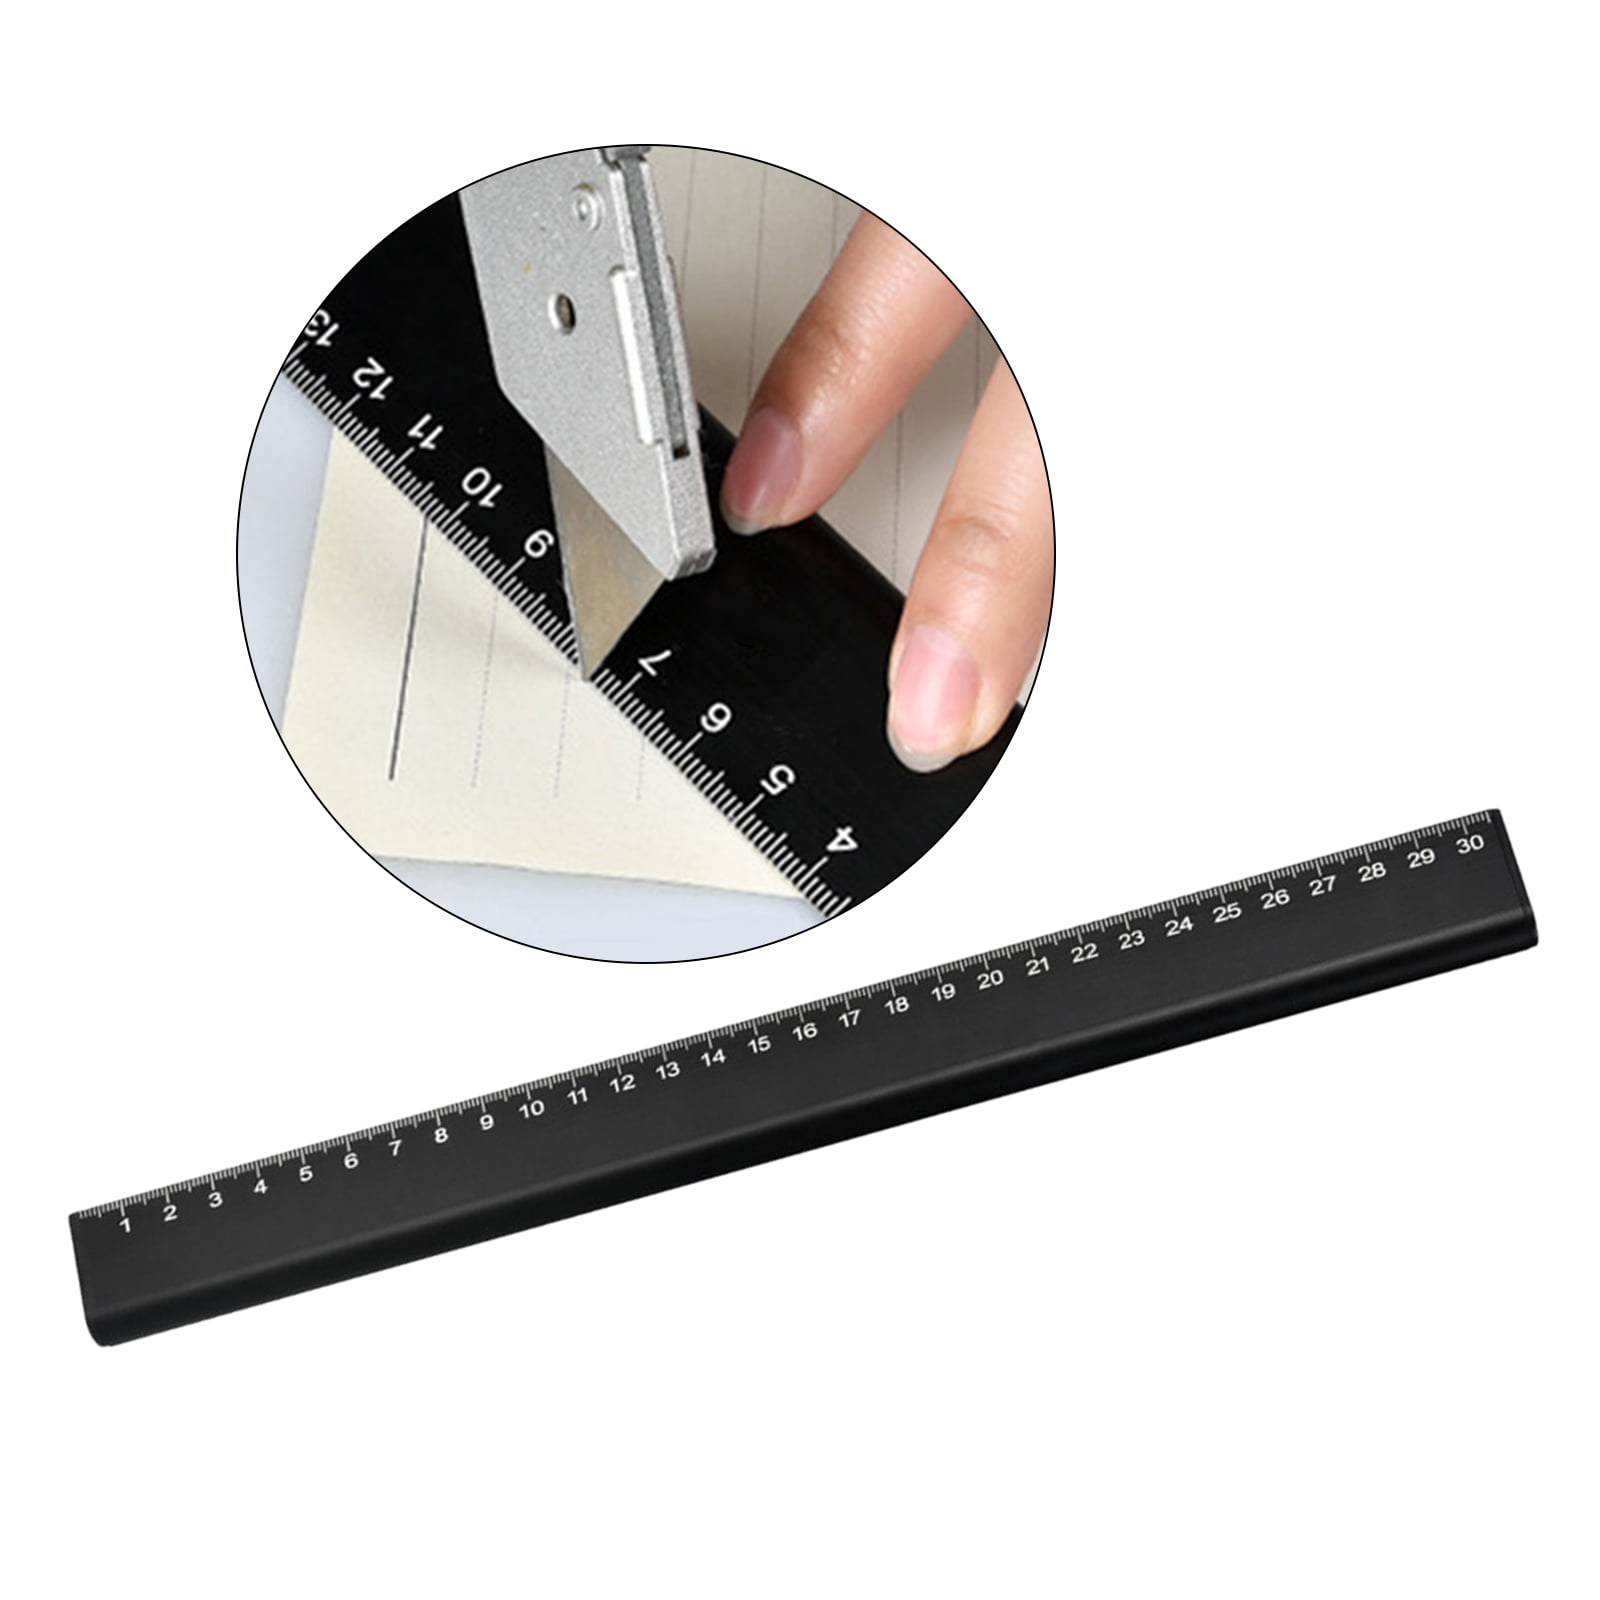 6 inch/12 inch Water Drop Scale Ruler Metal Measuring Ruler Drafting Tool 